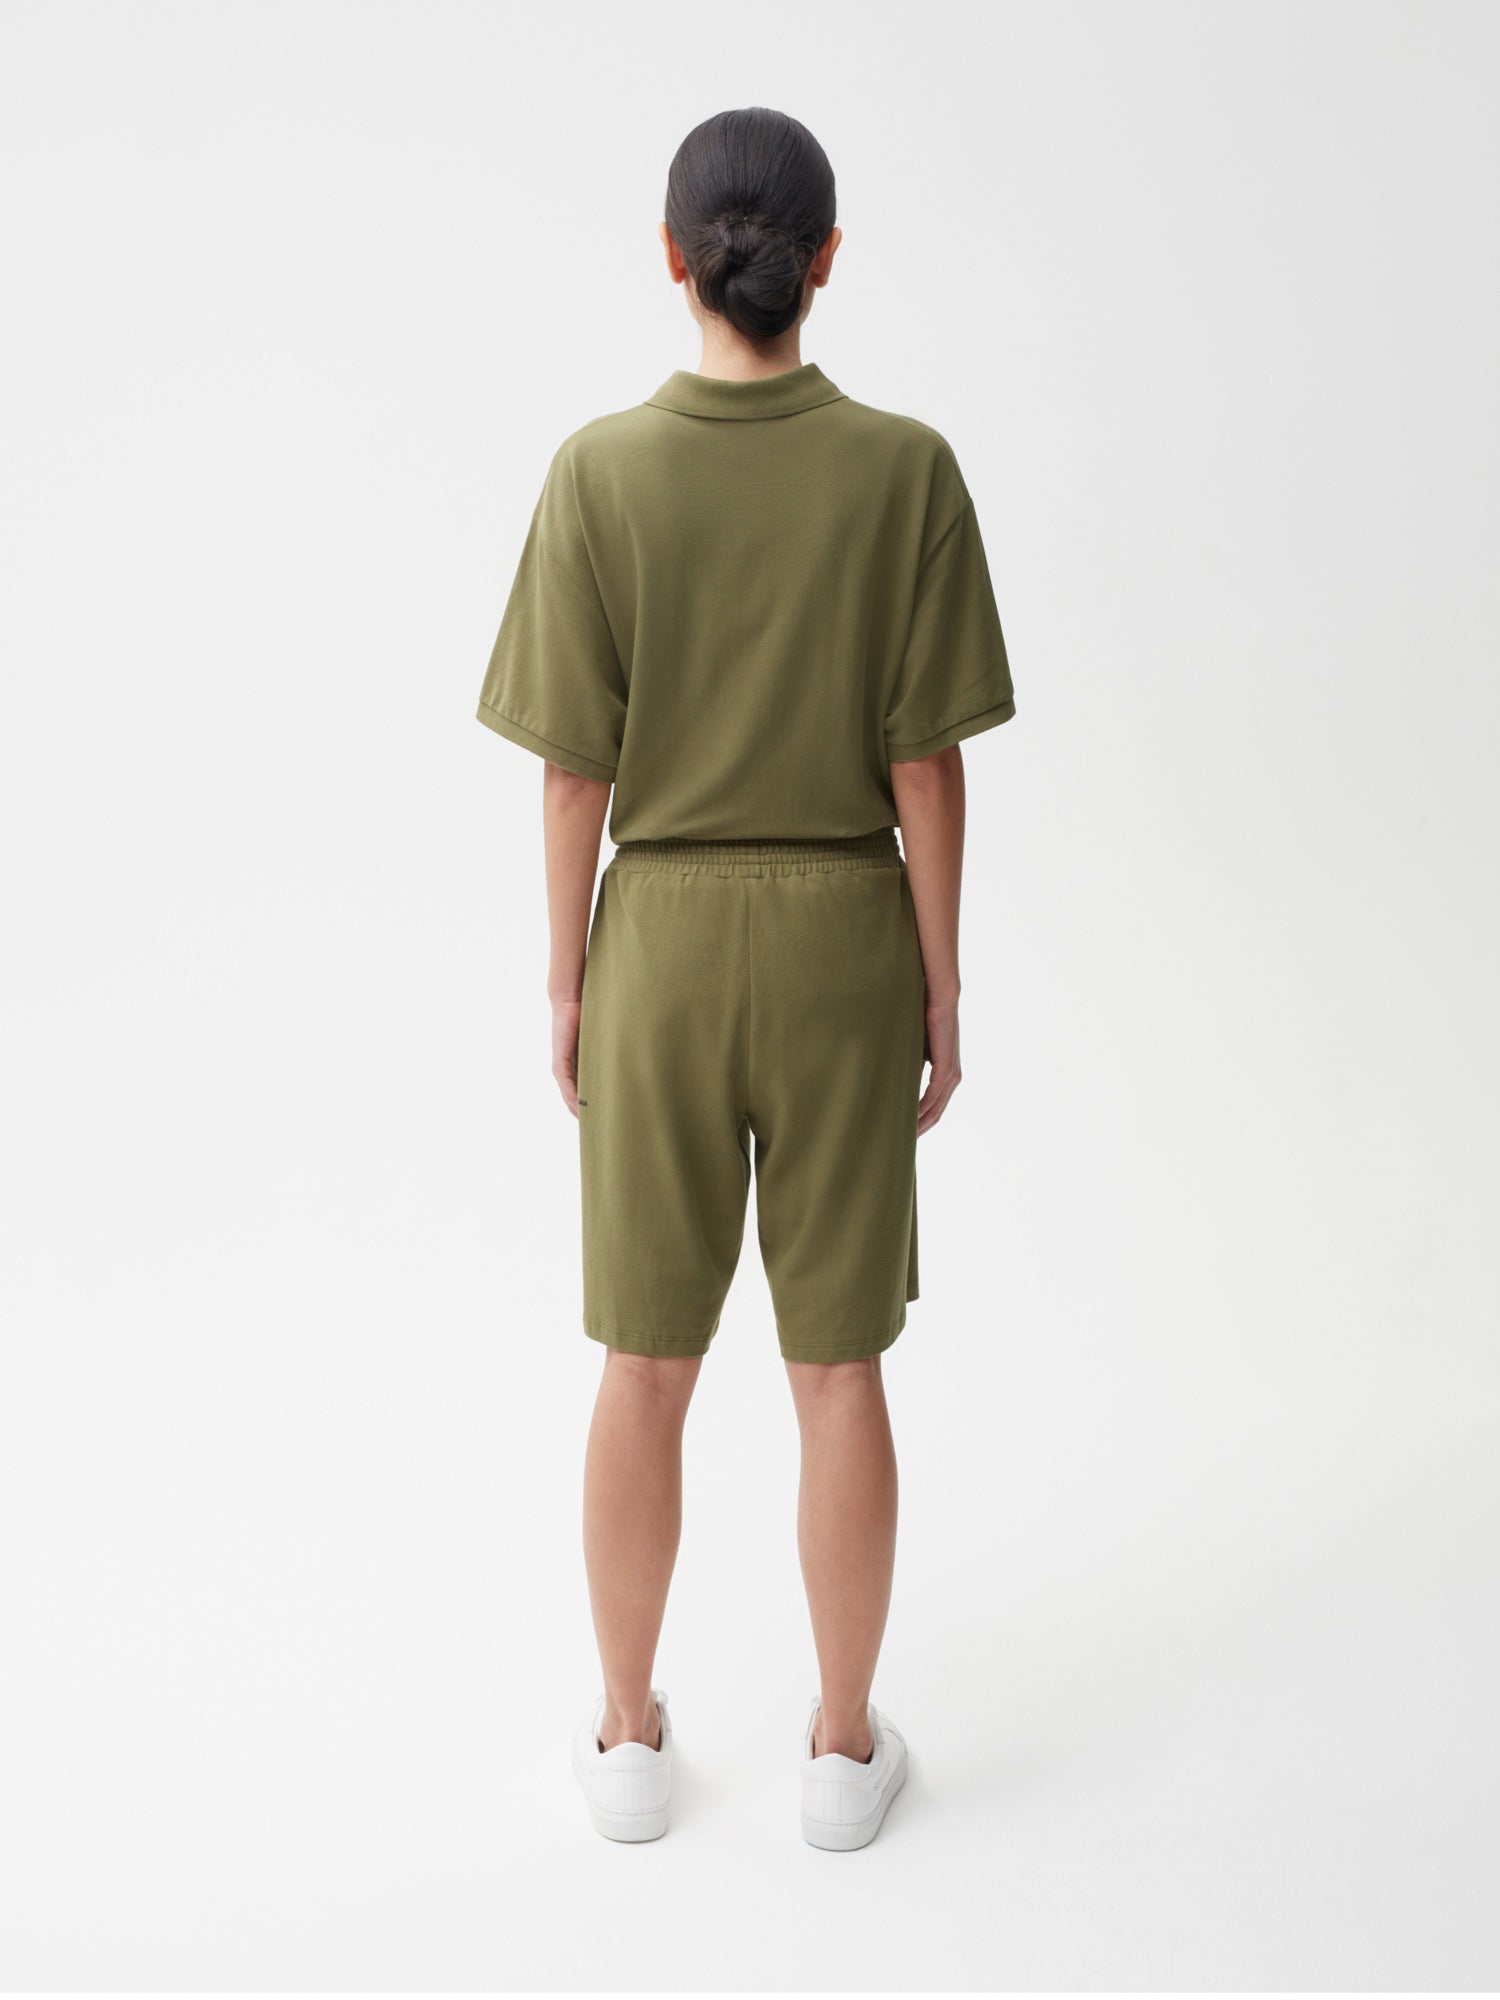 Organic Cotton Pique Shorts Olive Female Model